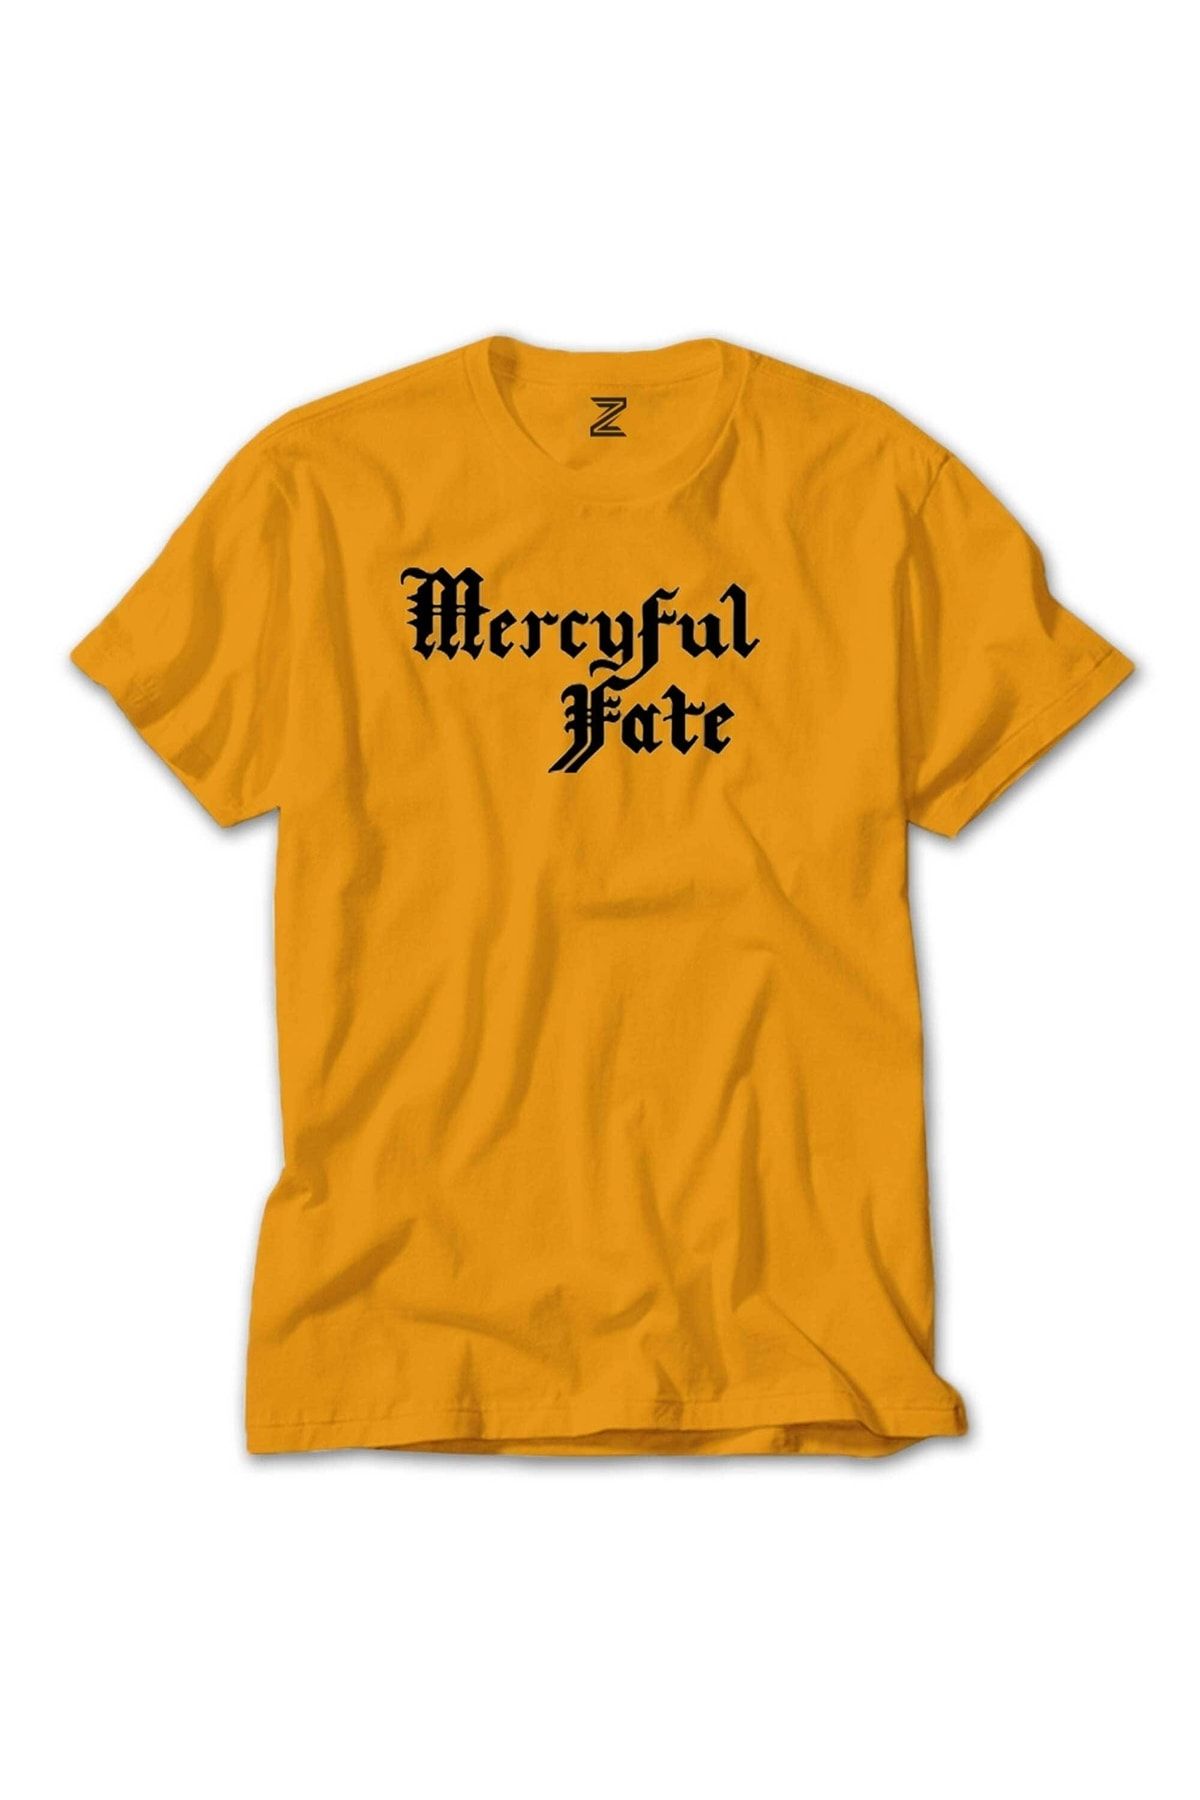 Z zepplin Mercyful Fate Logo Text Sarı Tişört